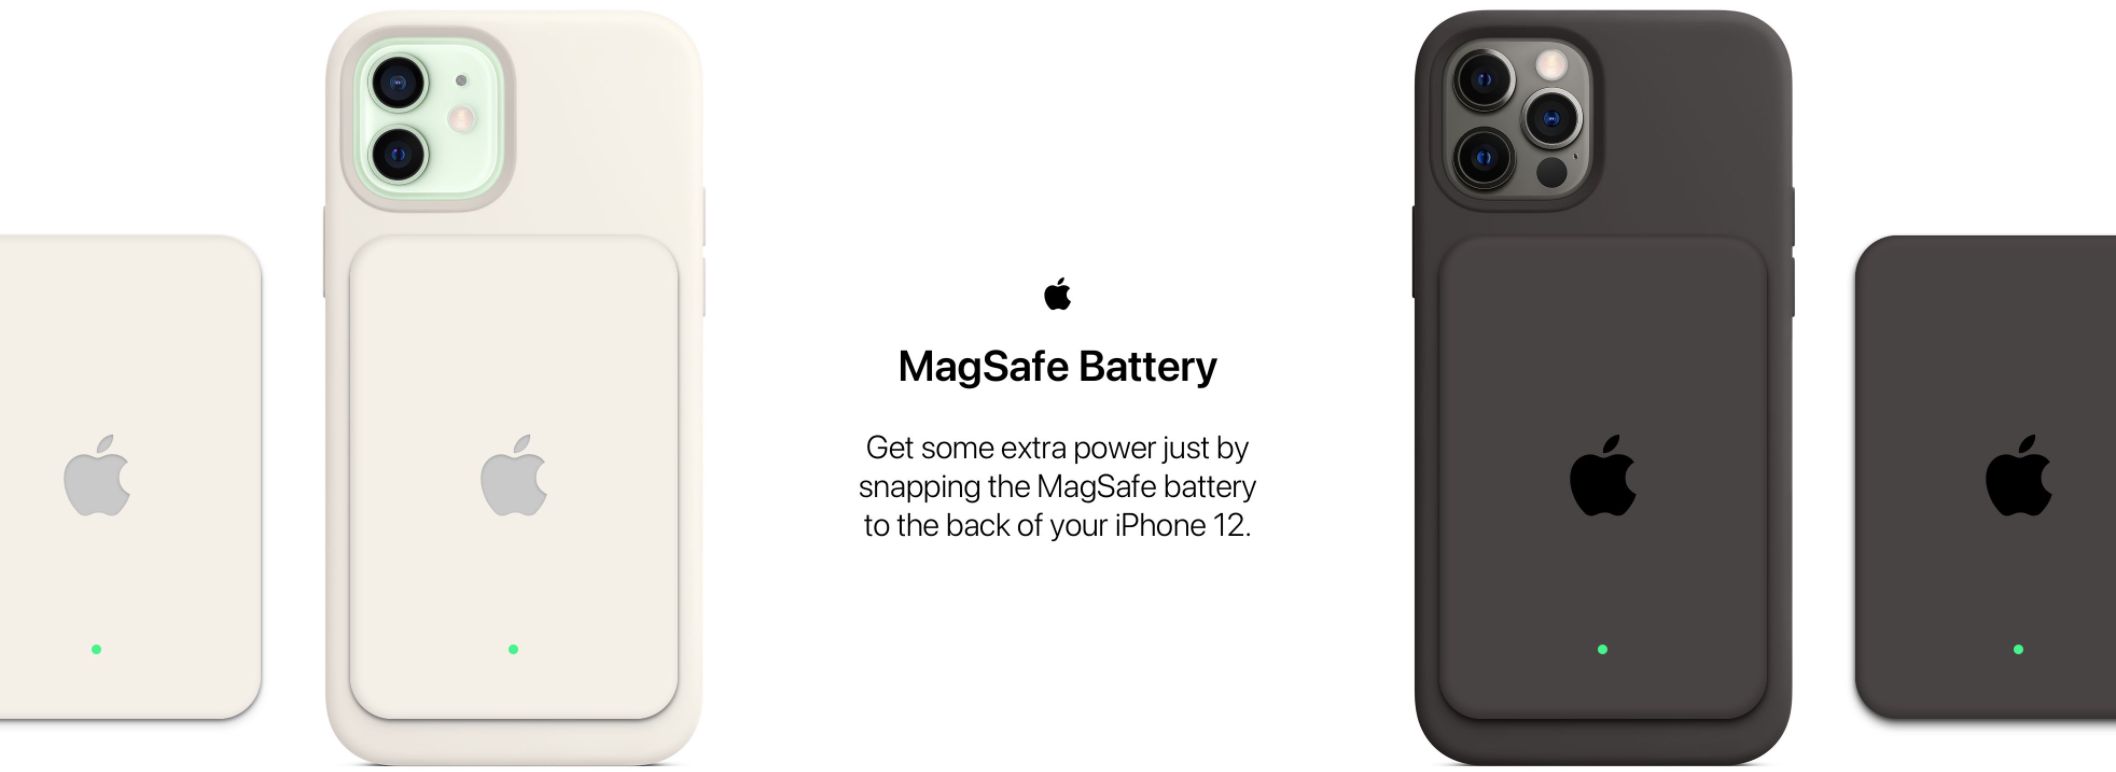 News 5 November 2020 يوضح مفهوم MagSafe لجهاز iPhone 12 أنه يمكن عمل البطارية الذكية بشكل مختلف